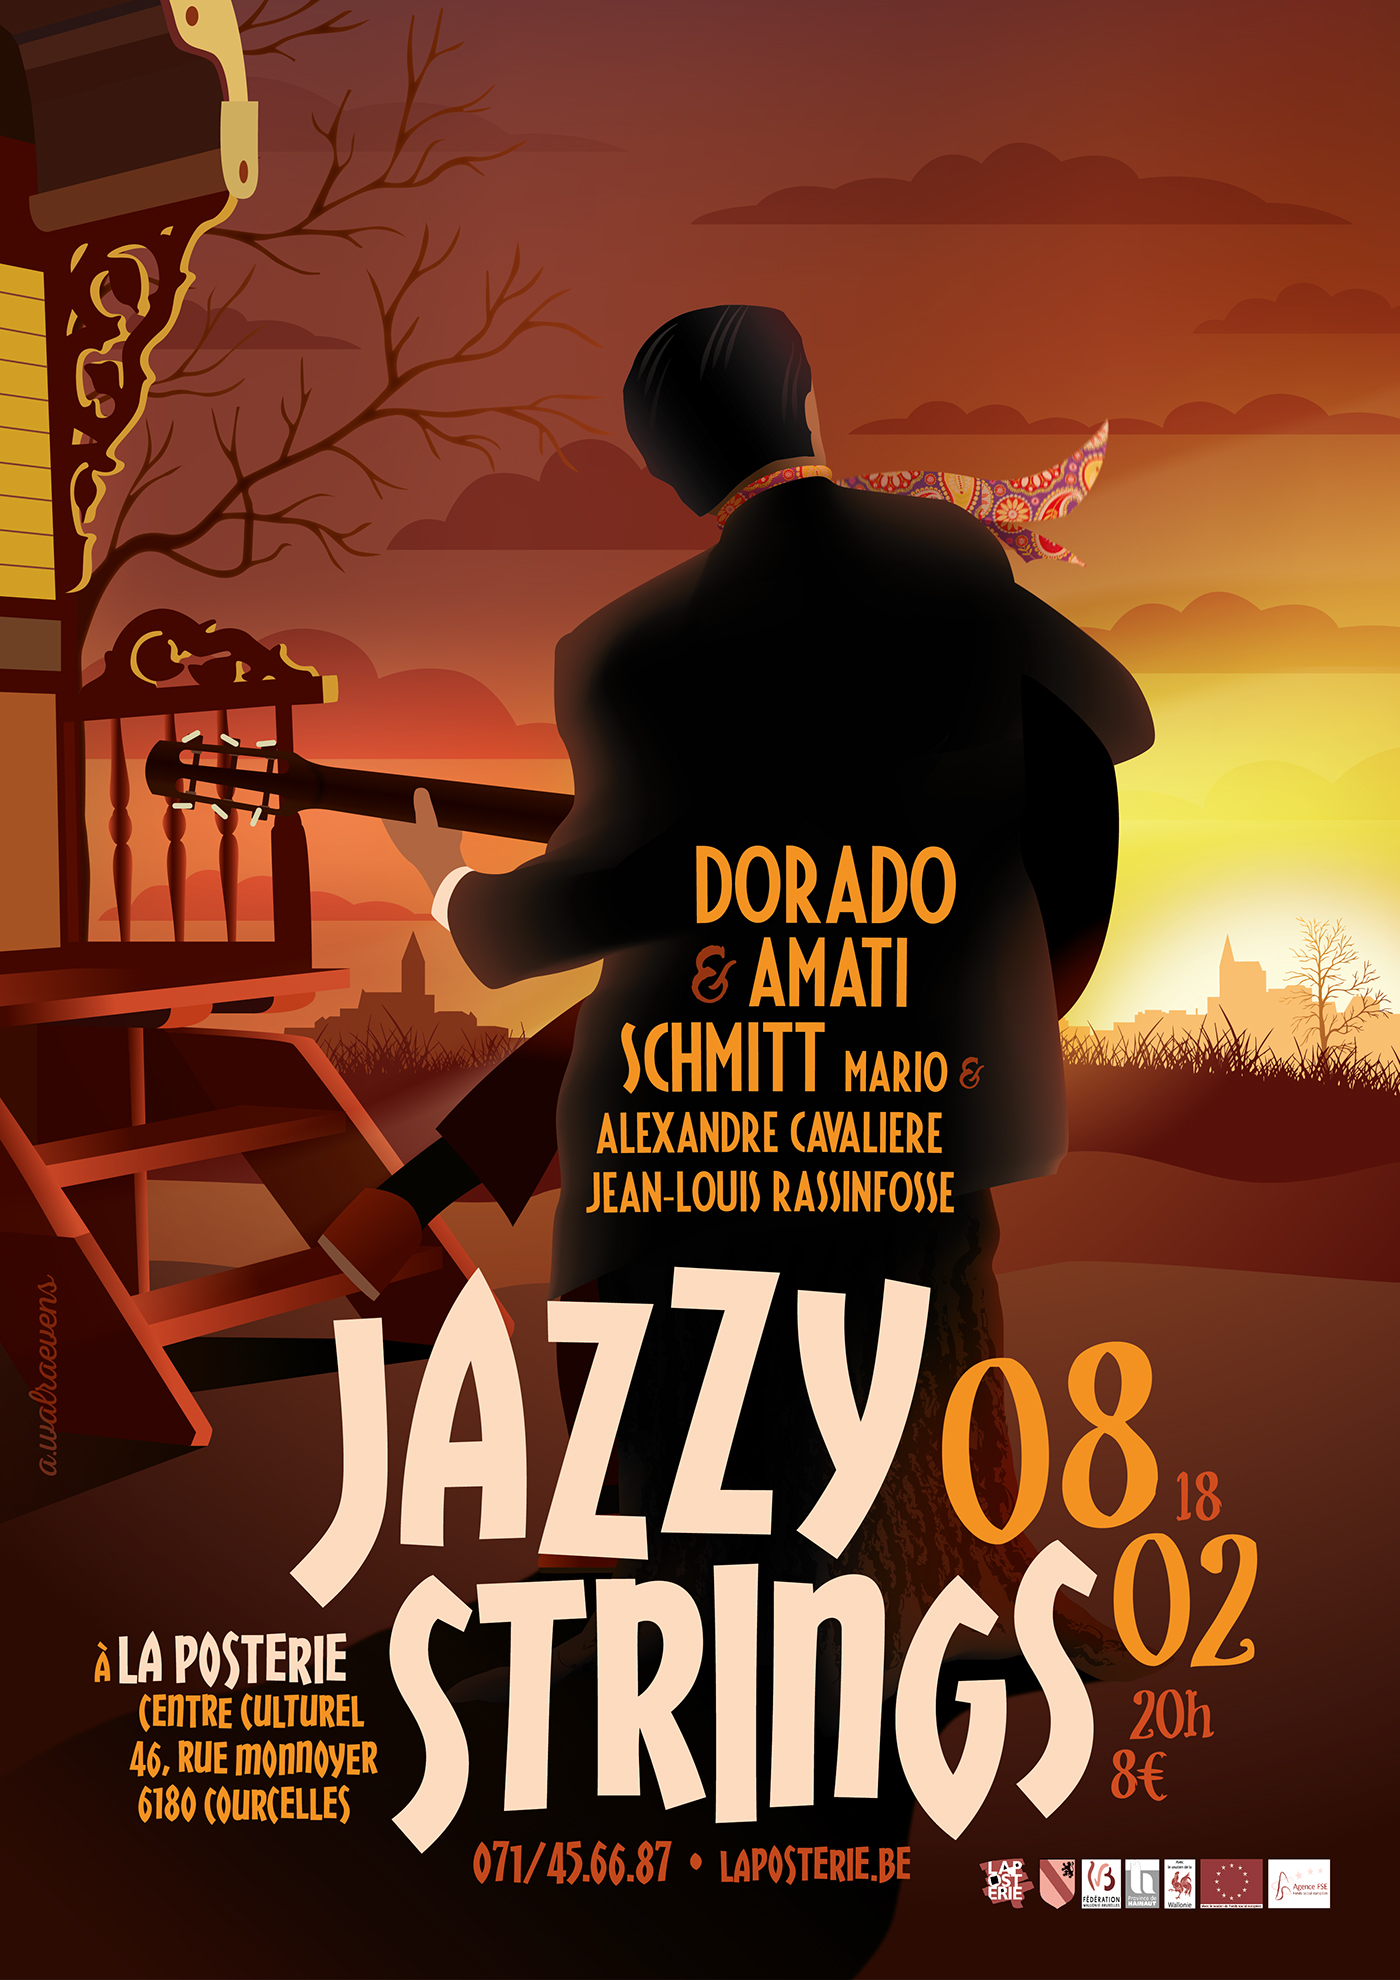 django jazz poster strings gypsy Manouche guitar ILLUSTRATION 